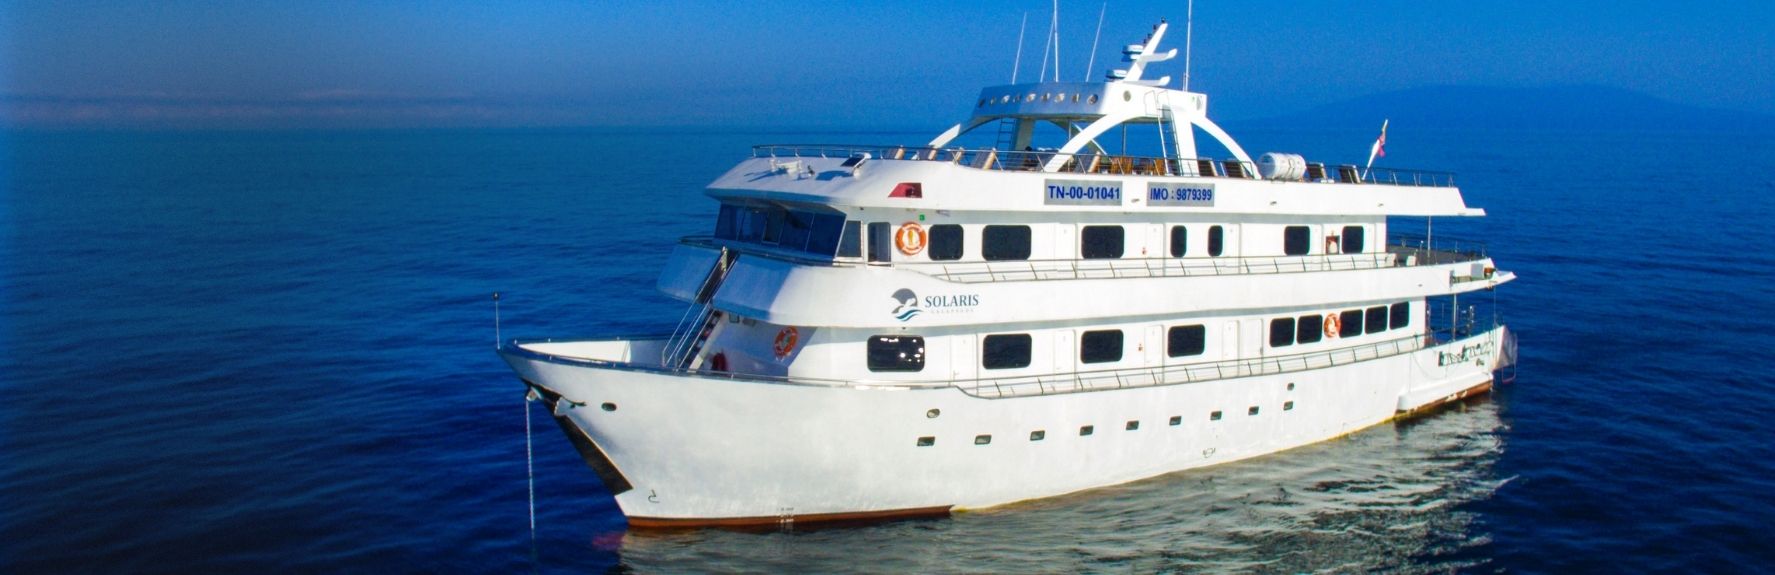 Solaris Galapagos Cruise